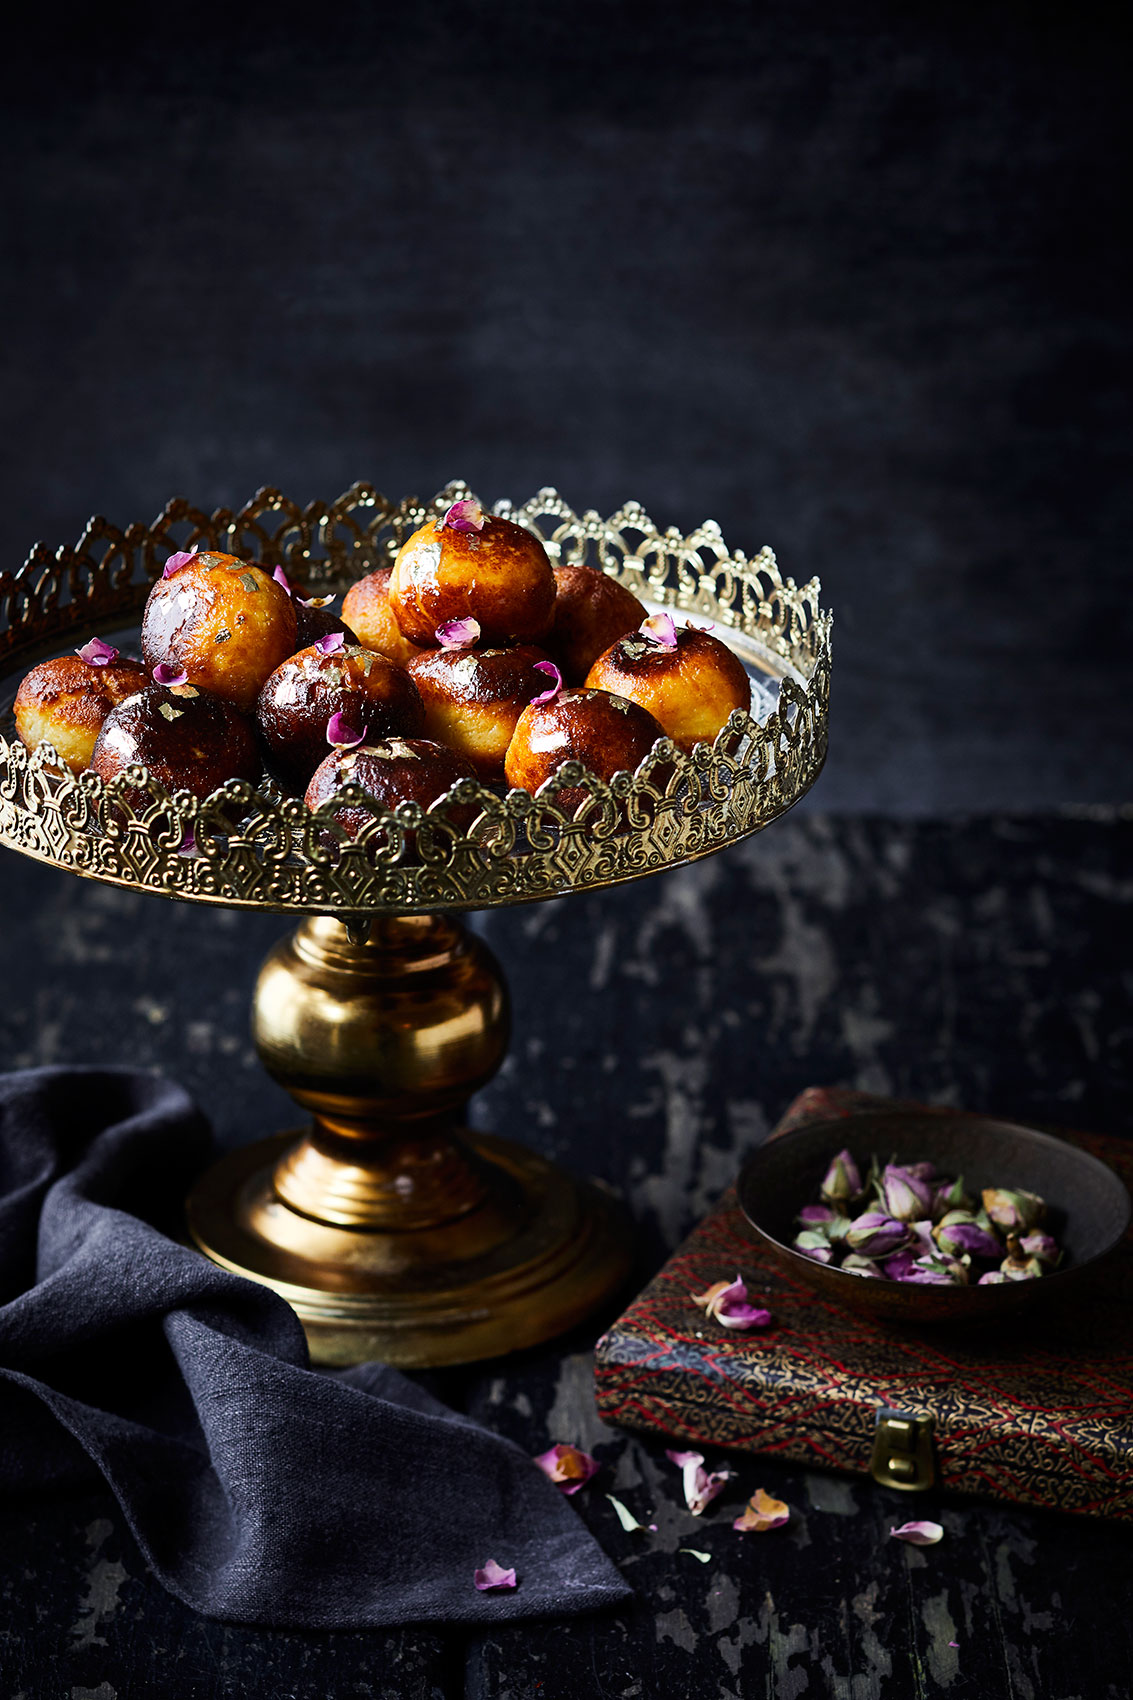 My Indian Kitchen • Bite-Sized Gulab Jamun Milk Balls on Cake Tray • Cookbook & Editorial Food Photography